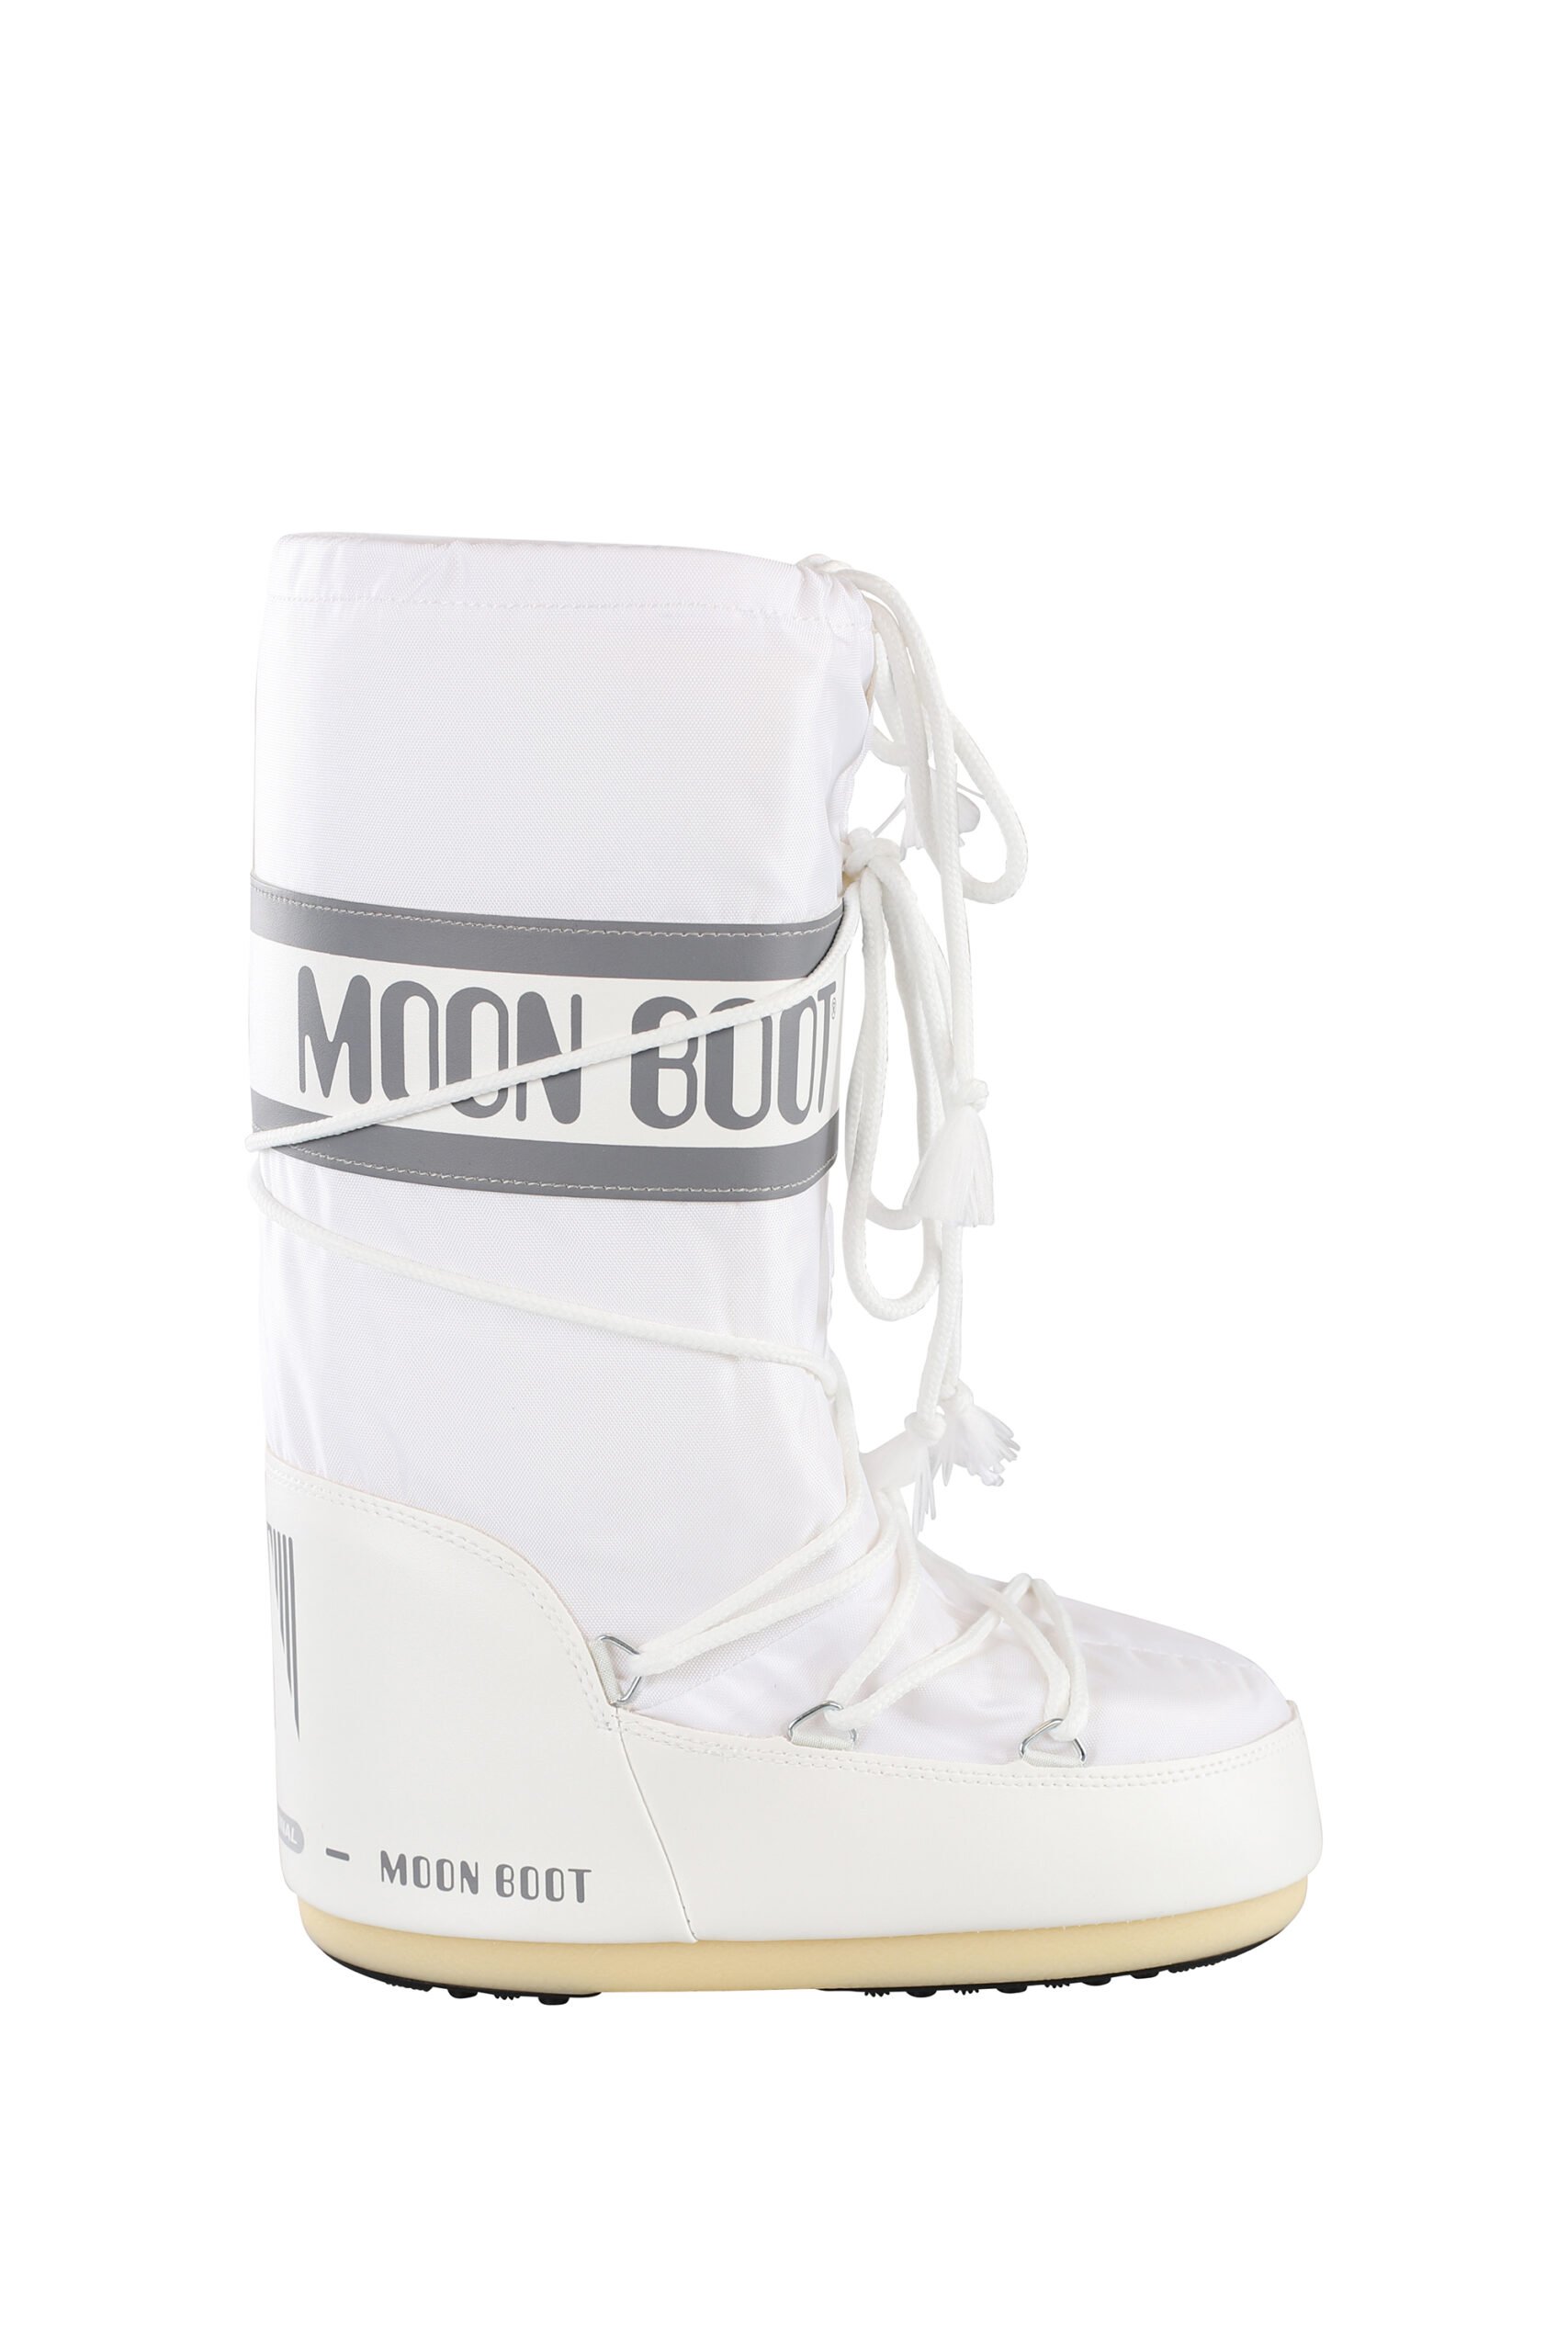 Moon Boot - Botas blancas de nieve con logo negro en cinta - BLS Fashion